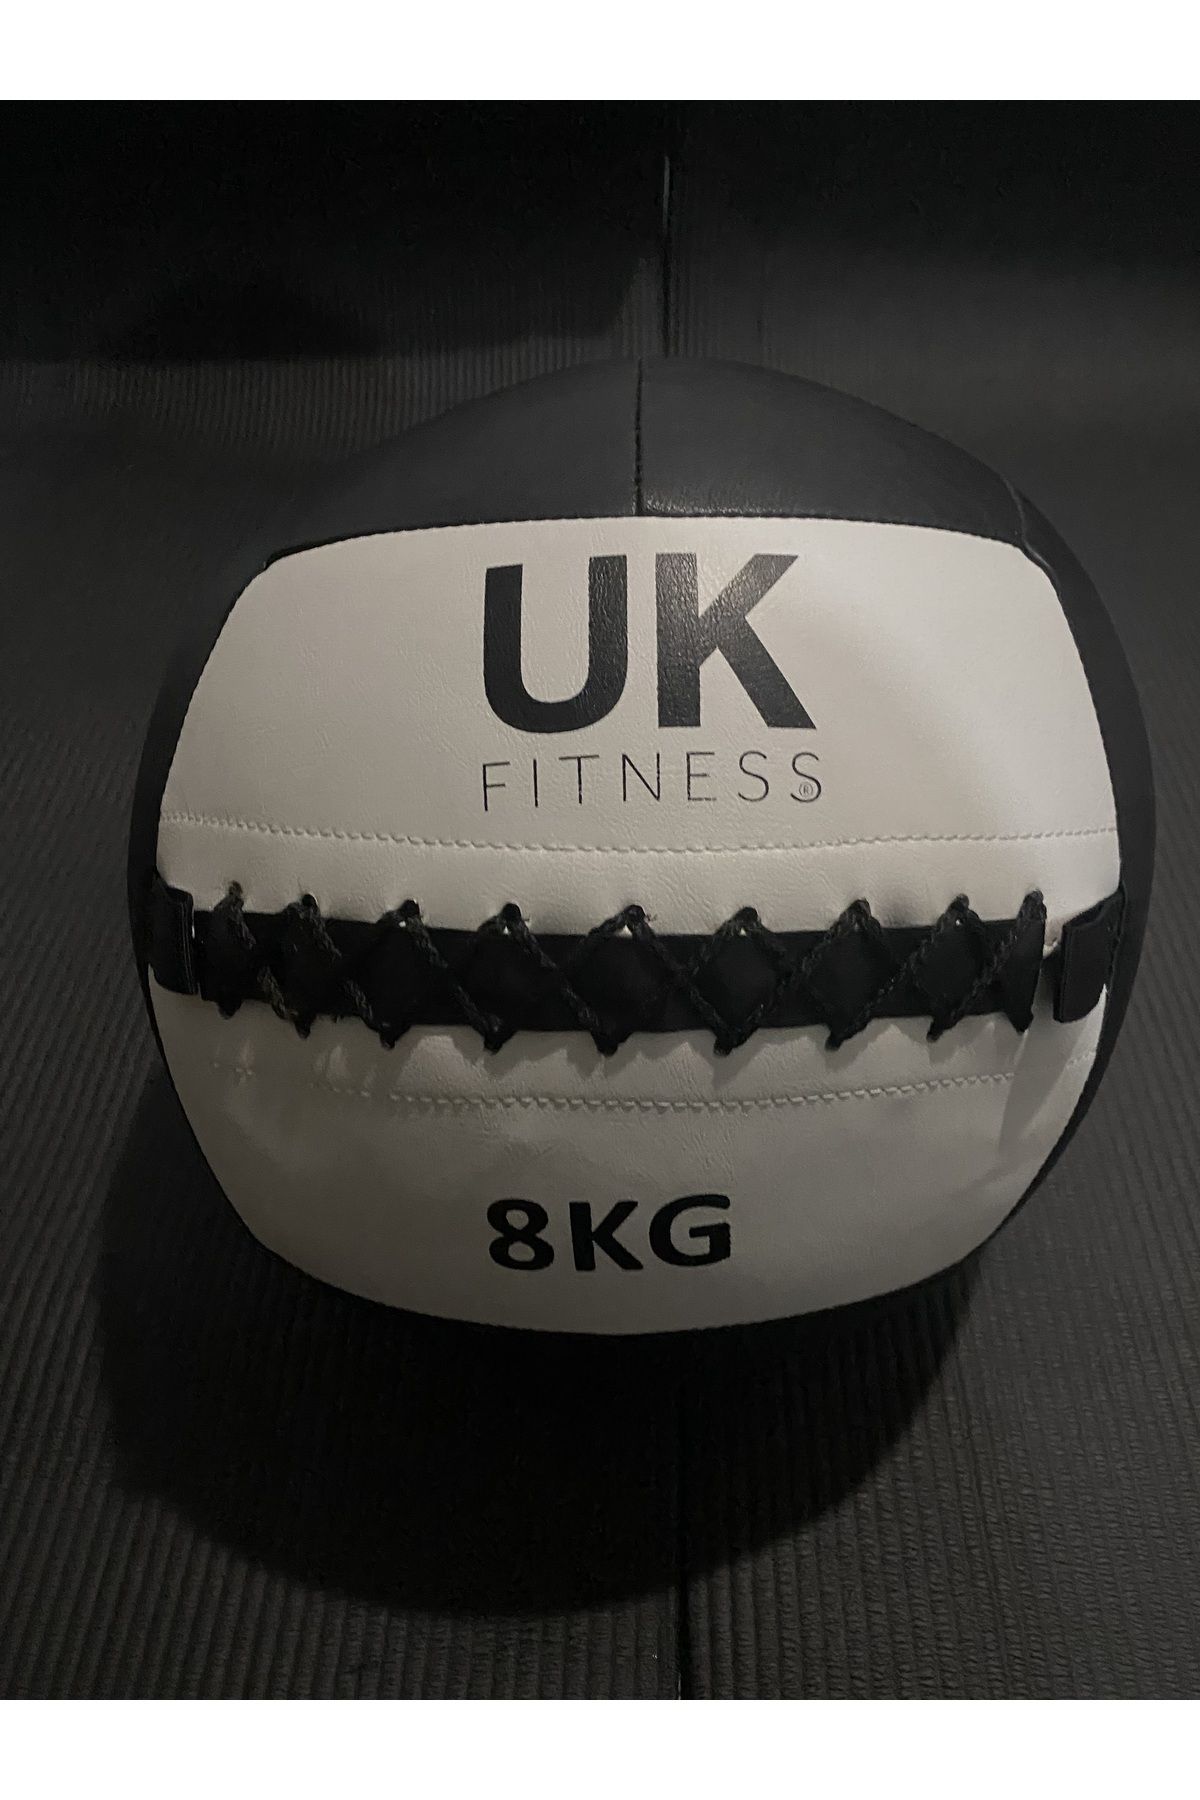 UK FİTNESS Uk Fitness Crossfit Gym Deri Sağlık/duvar Topu Medicine/wall Balls 8 Kg Pro.